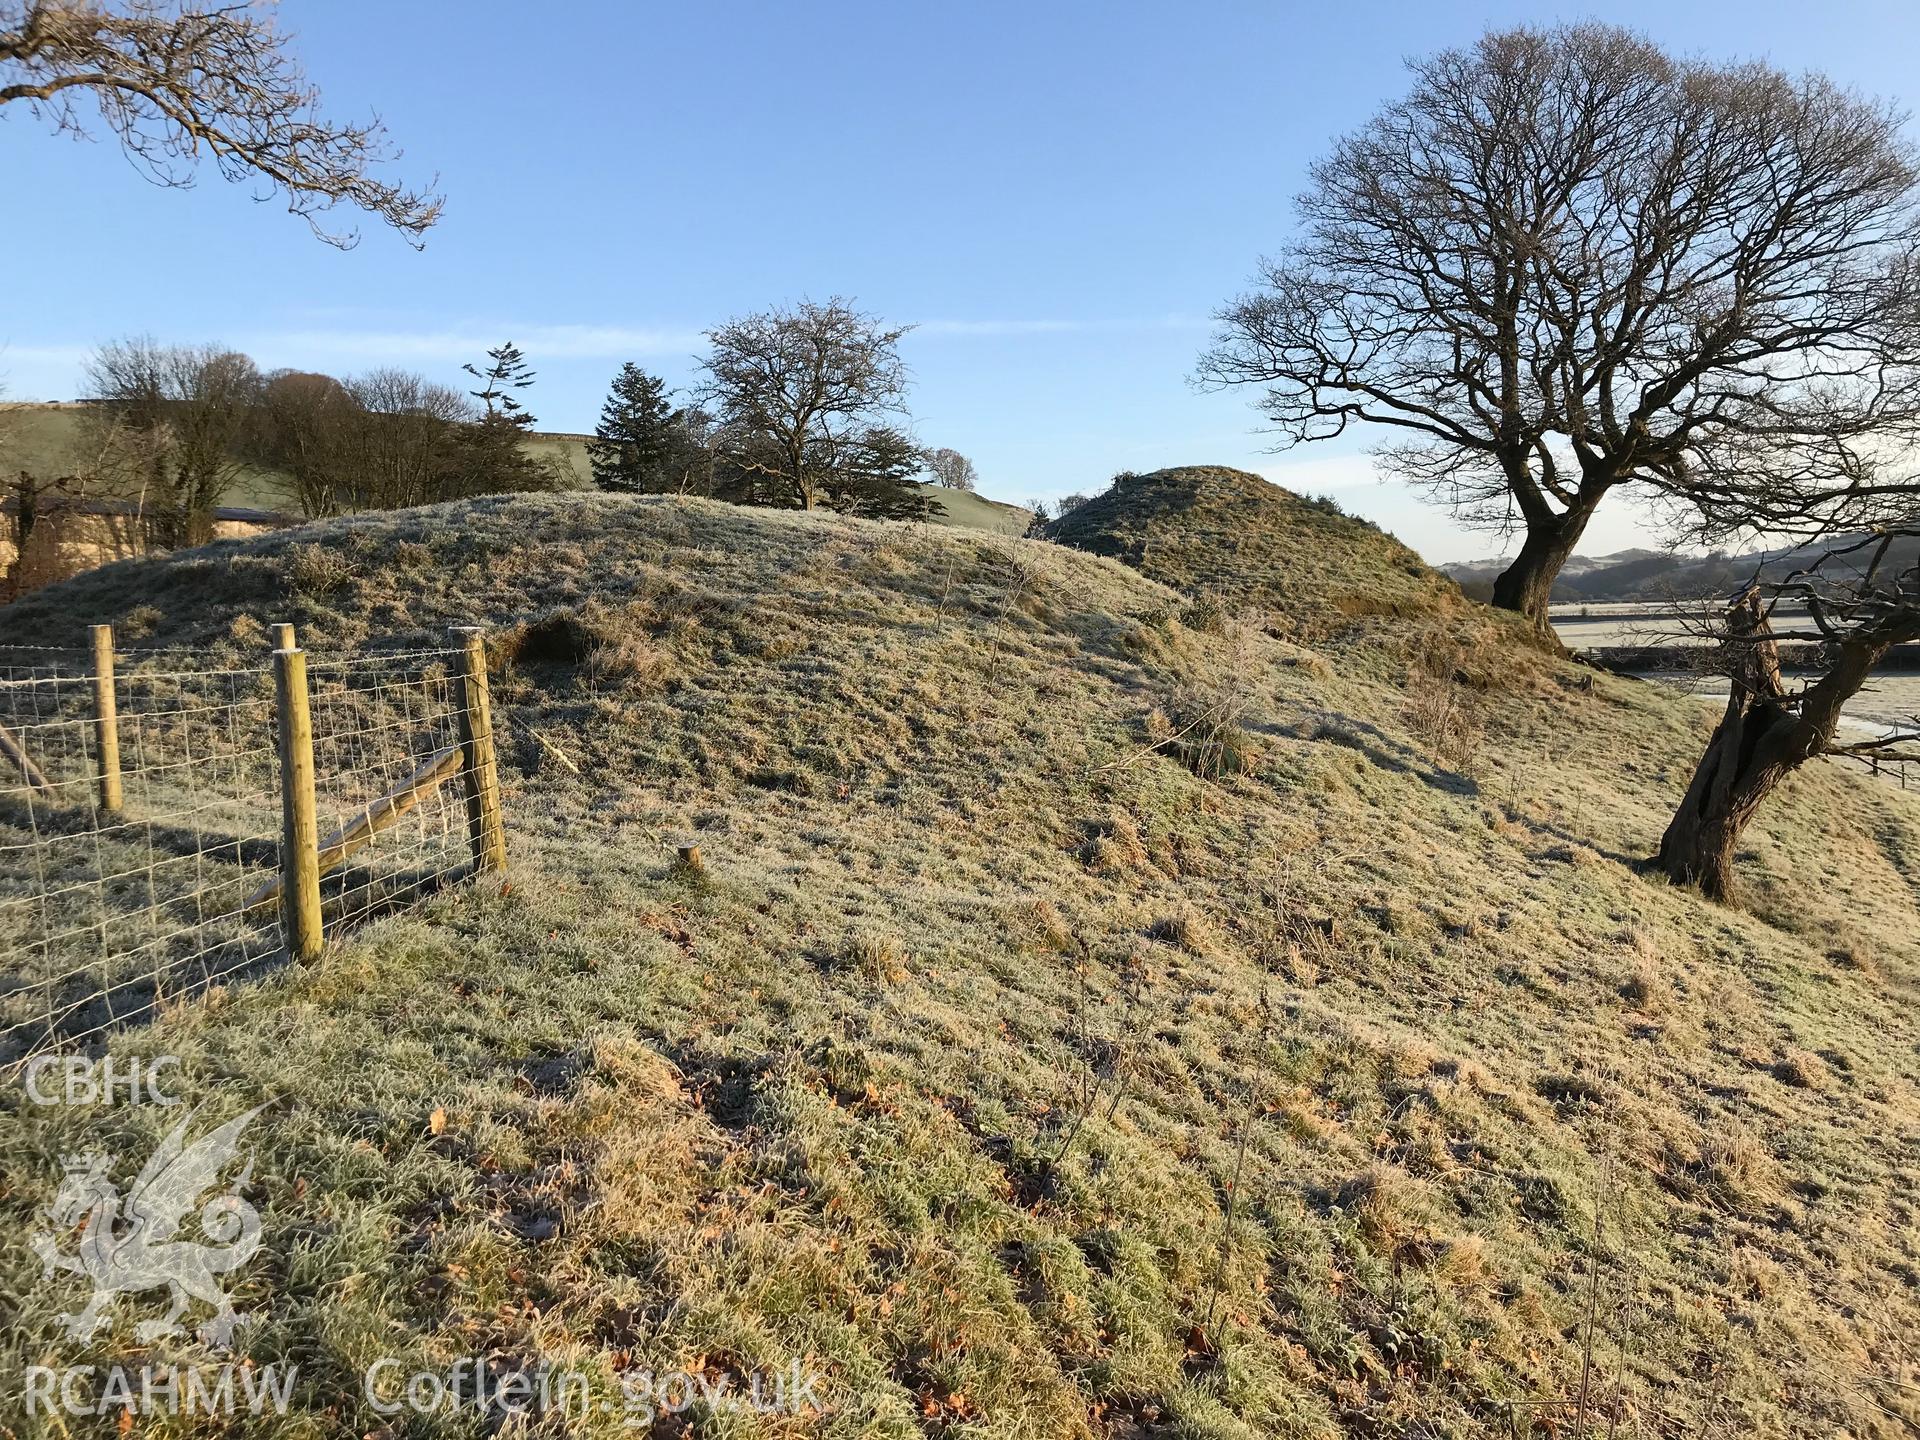 View of Llysun motte and bailey castle, Llanerfyl. Colour photograph taken by Paul R. Davis on 2nd January 2019.